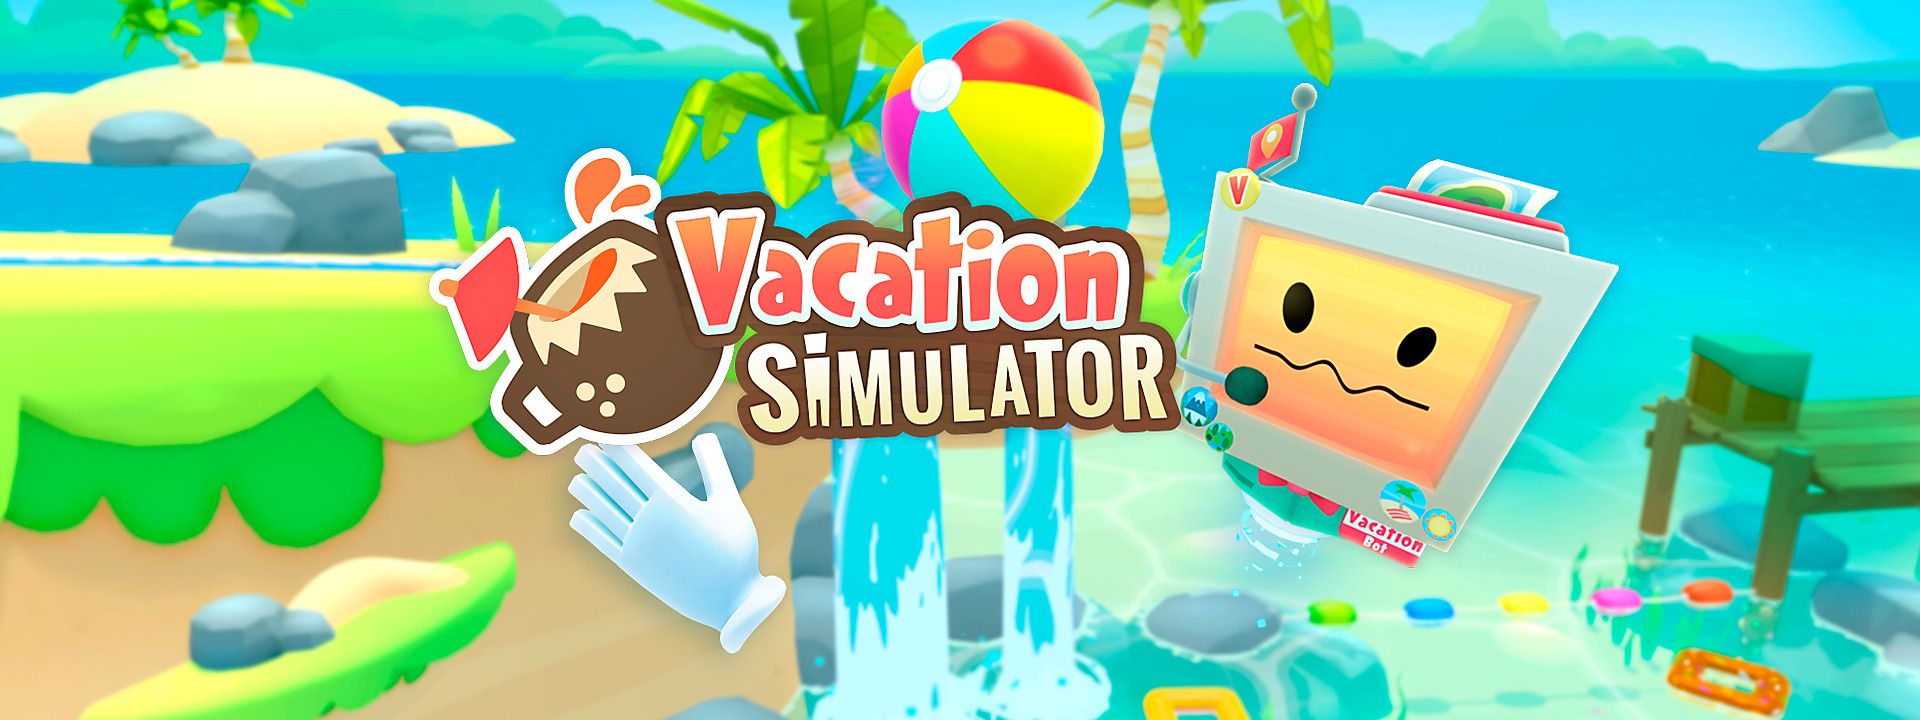 Vacation Simulator VR list 2019 title